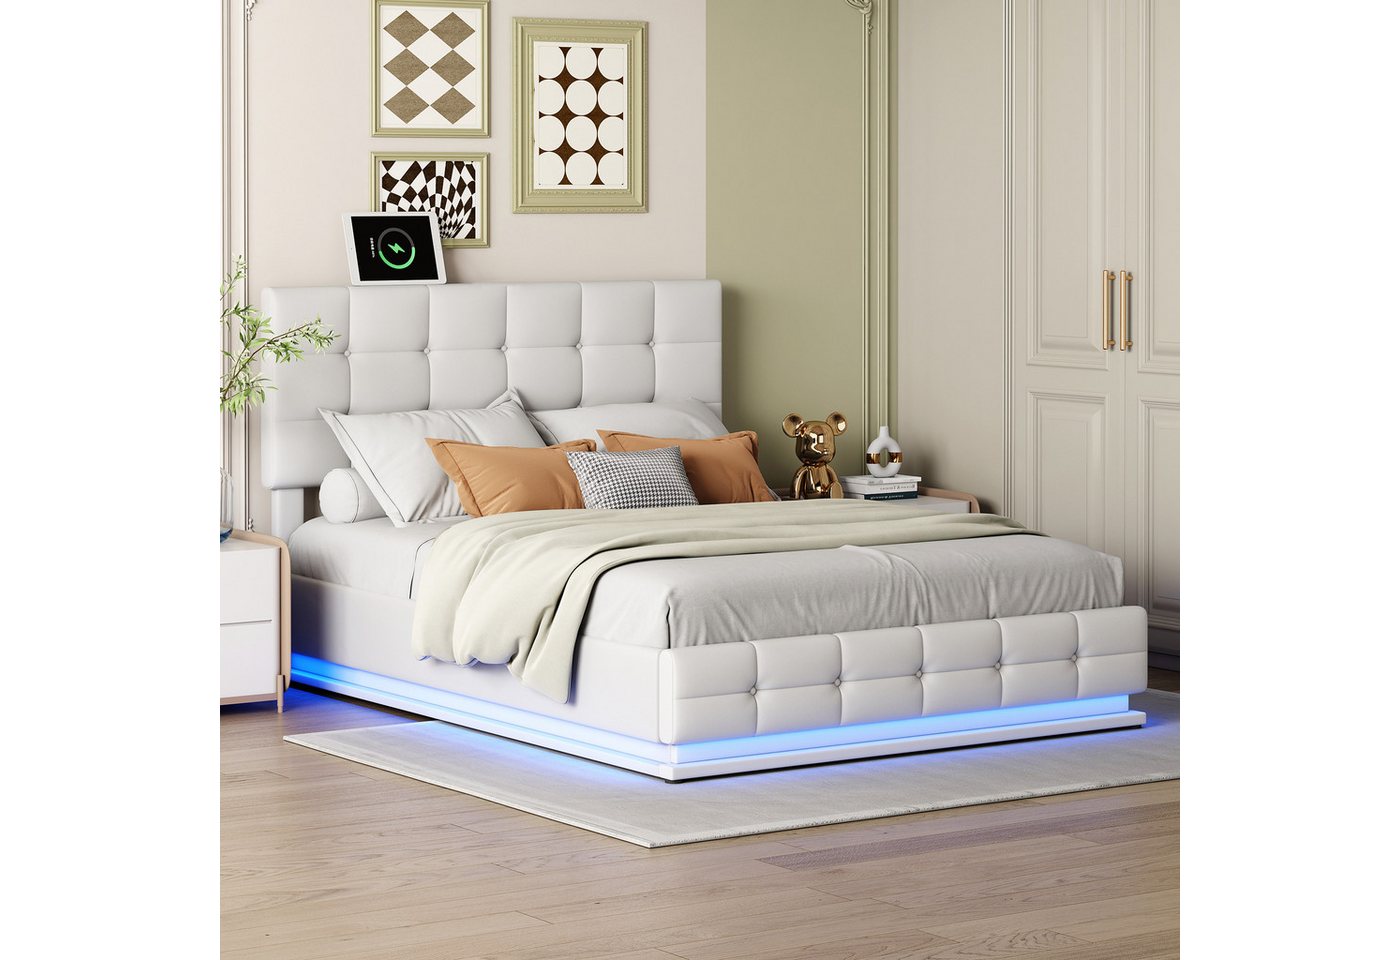 XDOVET Polsterbett LED Beleuchtung & Hydraulisch anhebbarer Bettstauraum 140x200, Bettkasten & Lattenrost Bezug aus Kunstleder Doppelbett von XDOVET